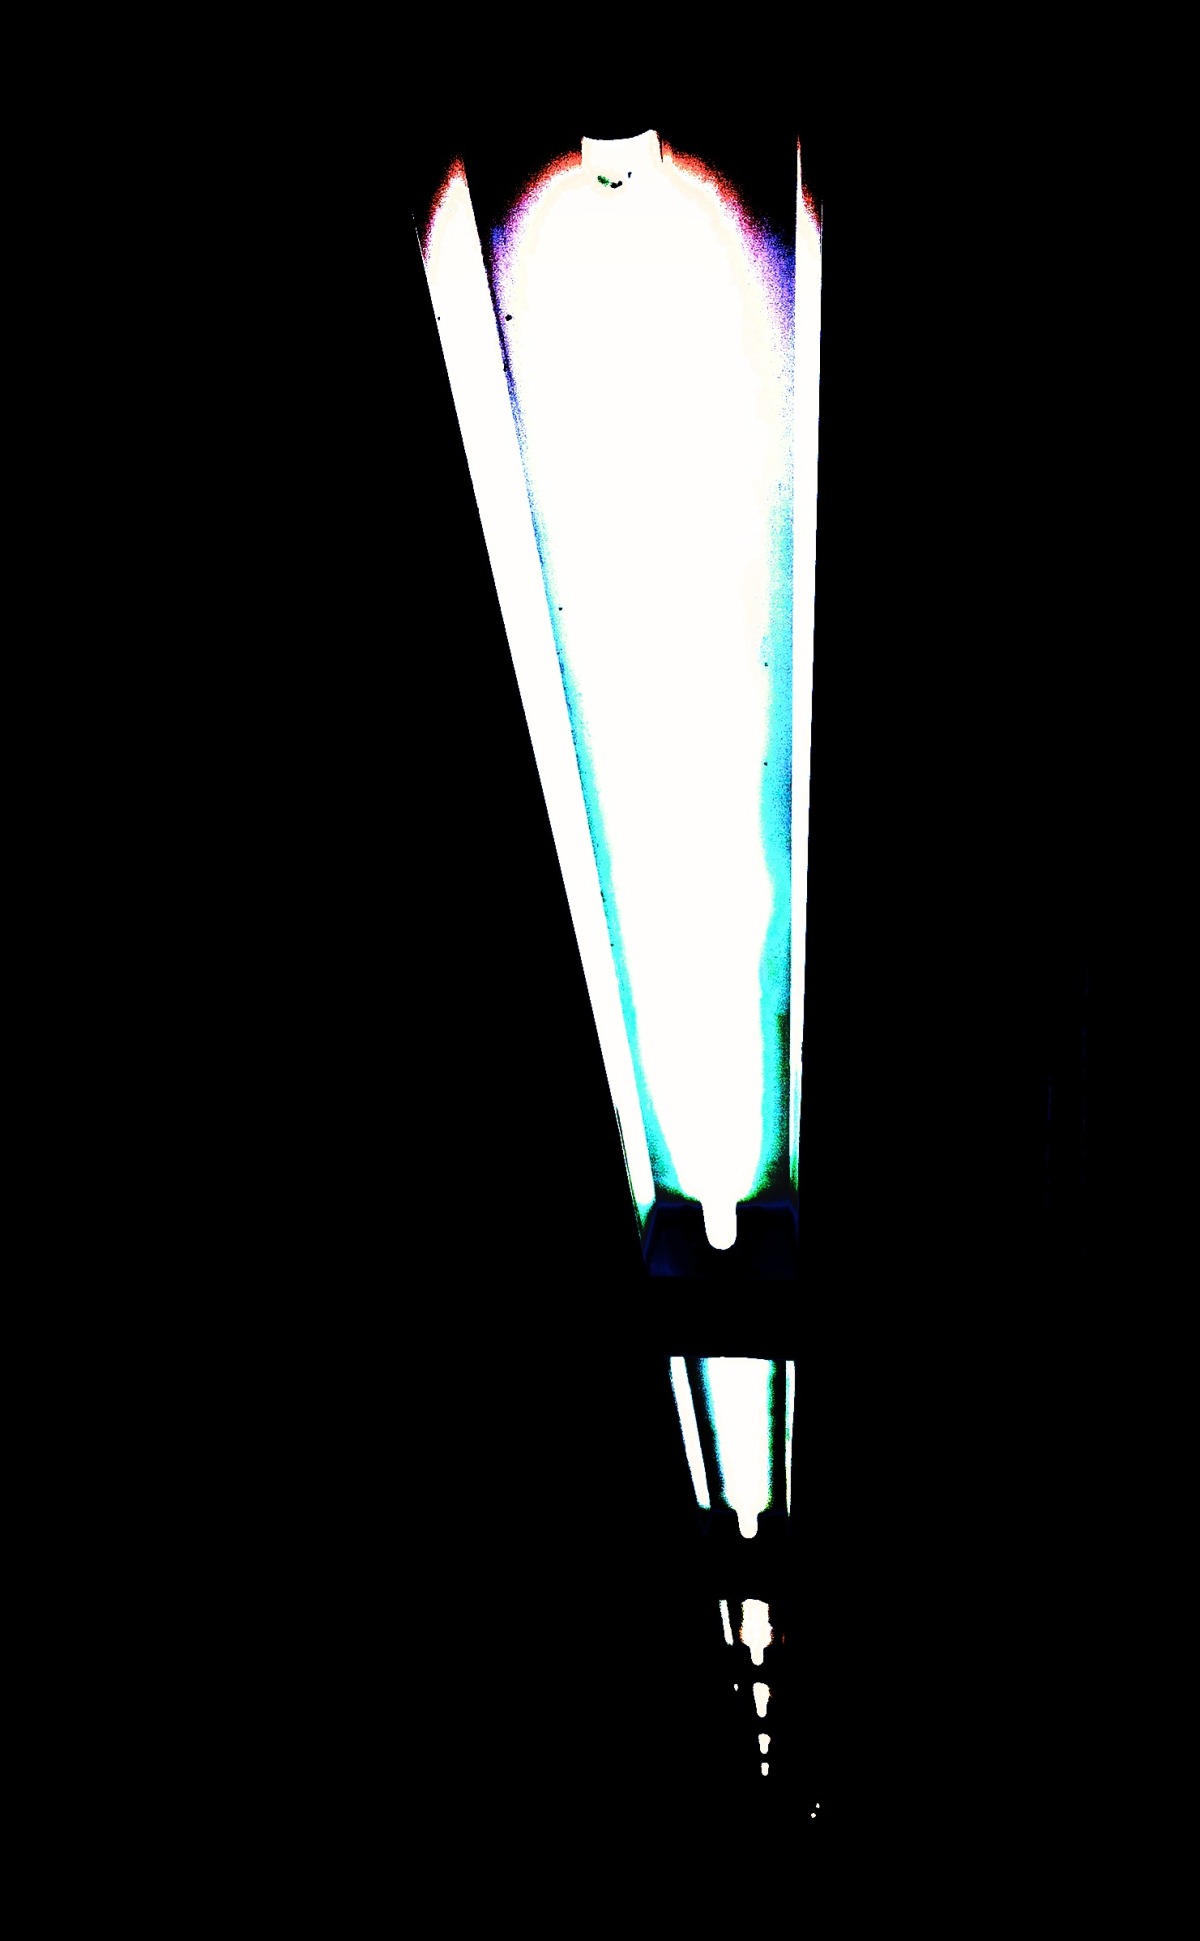 lampshade 8.23 upload 4.jpg